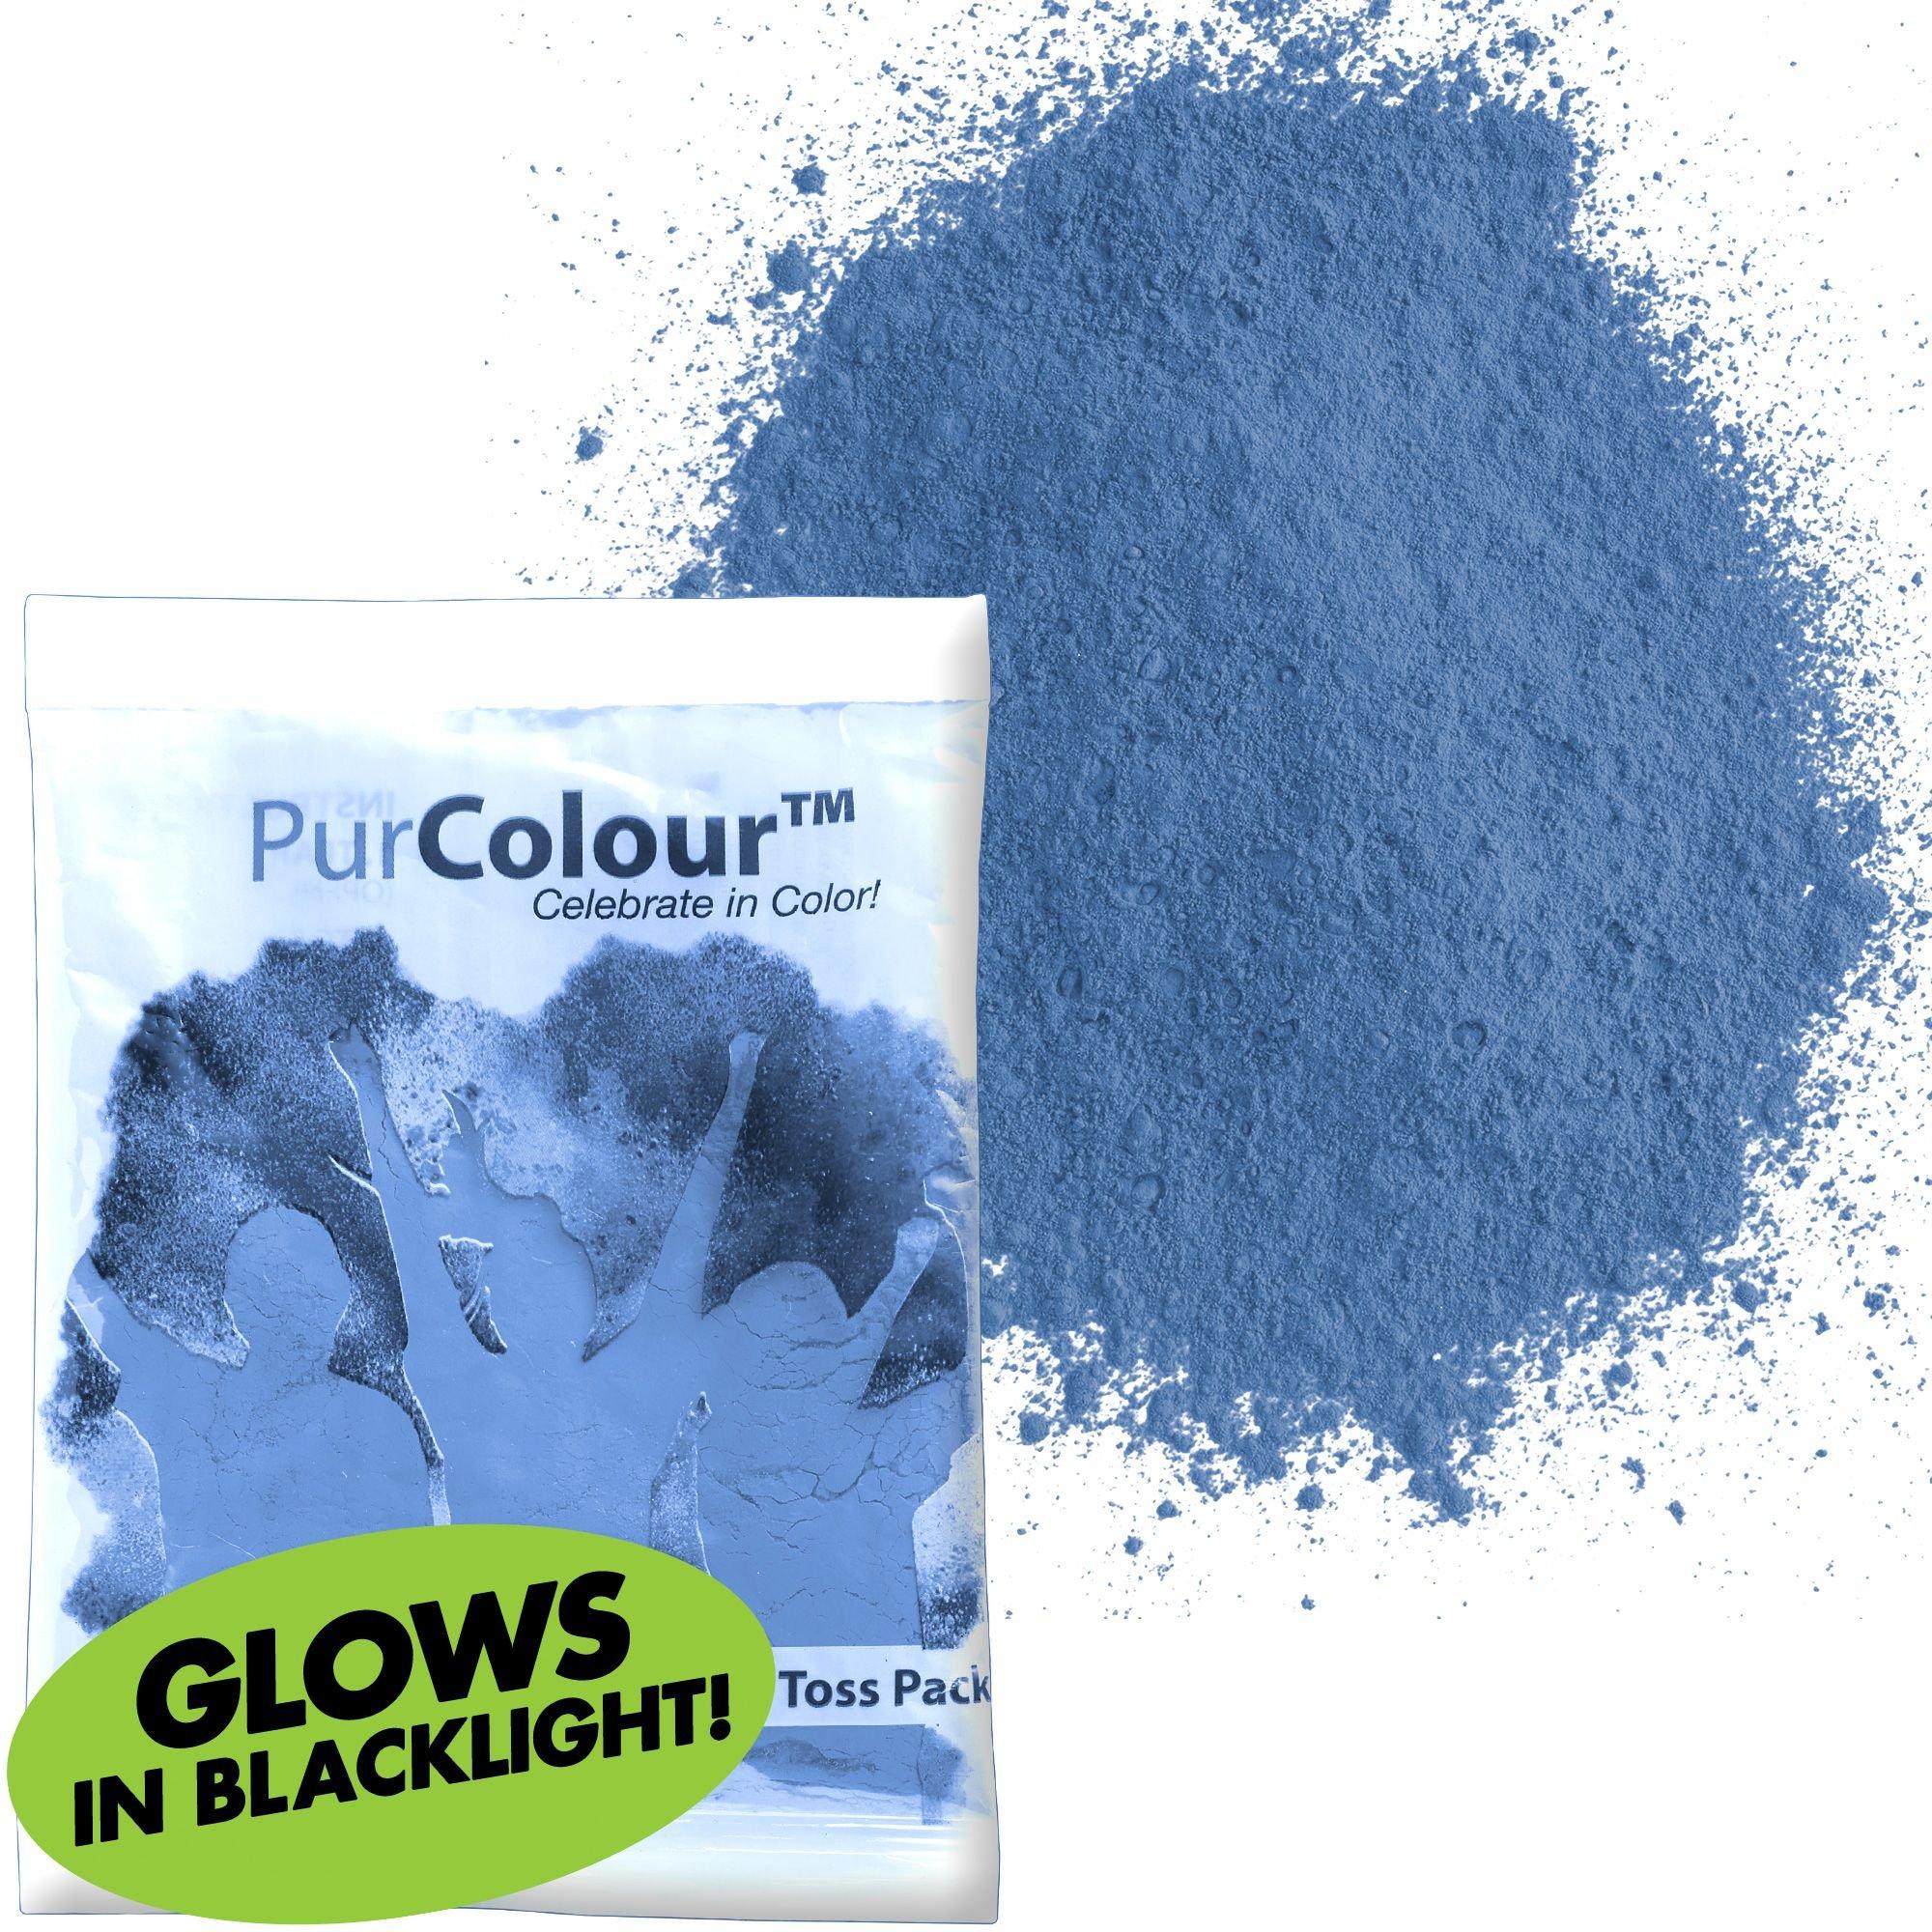 Adult Neon Blue Color Powder 2.6oz Royal/Blue | Halloween Store | Hall